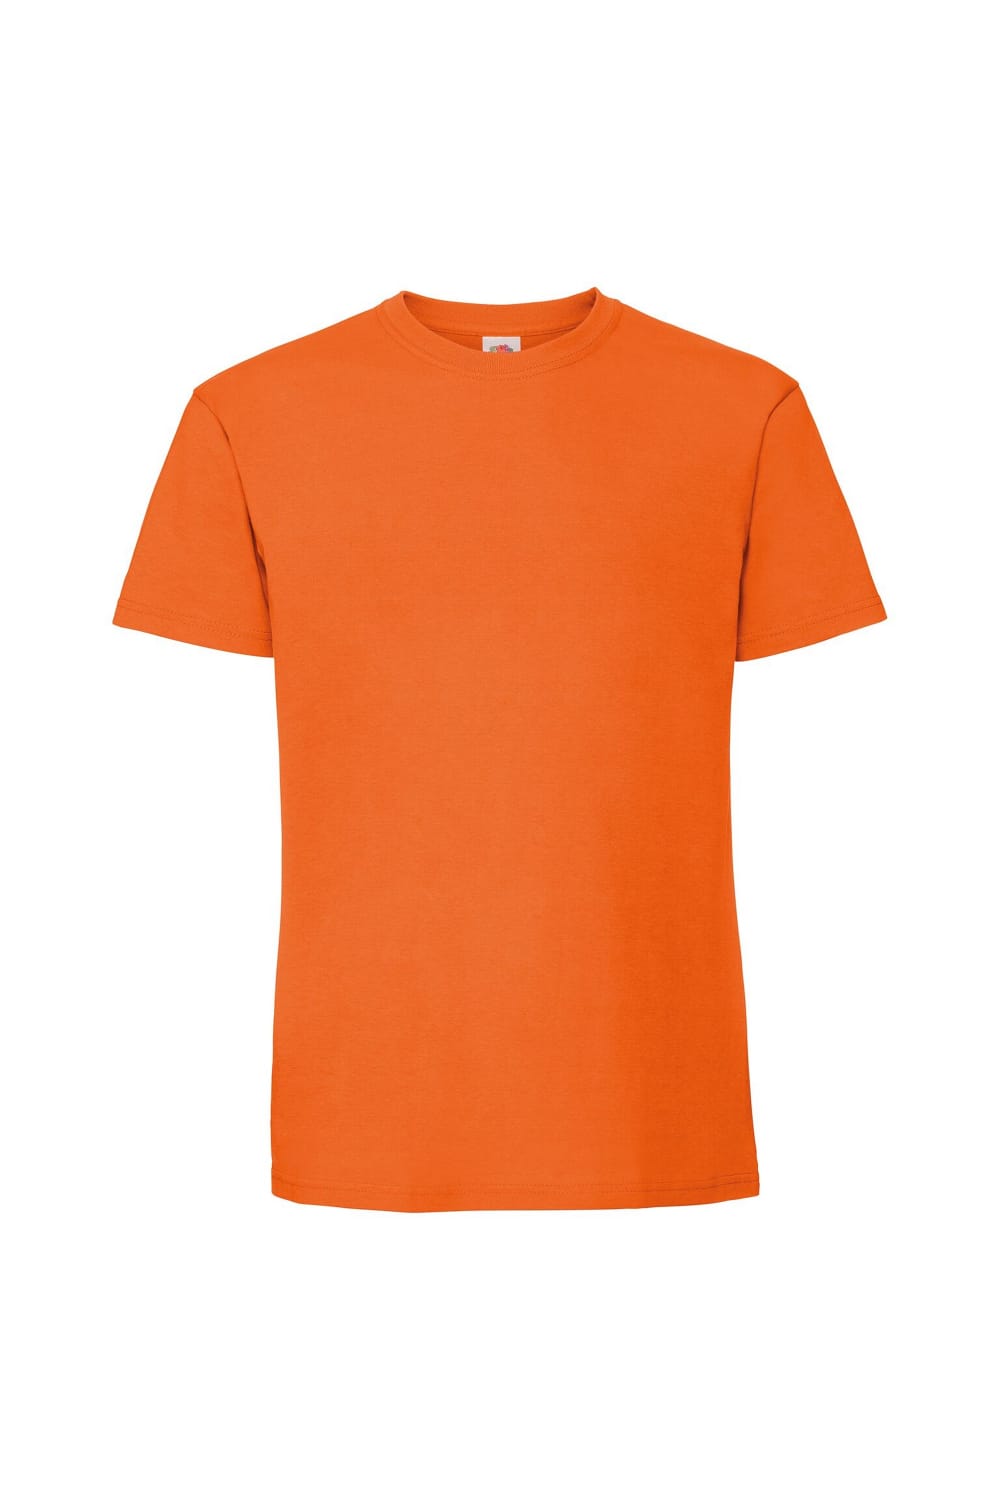 Fruit Of The Loom Mens Ringspun Premium T-Shirt (Orange)